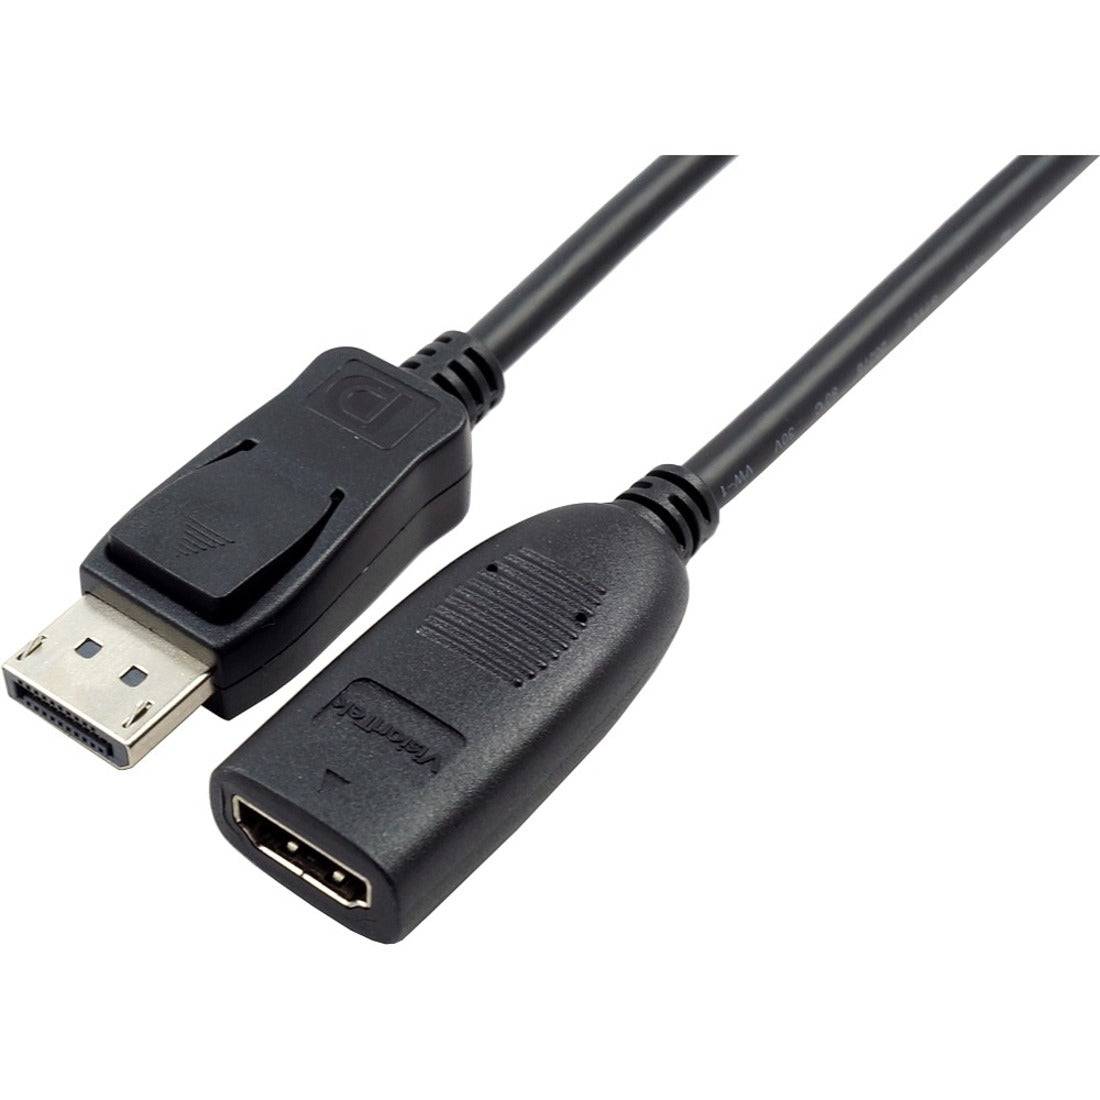 VisionTek 900857 التيار المباشر إلى HDMI 2.0 محول نشط (ذكر/أنثى)، توصيل وتشغيل، دعم الدقة 4K